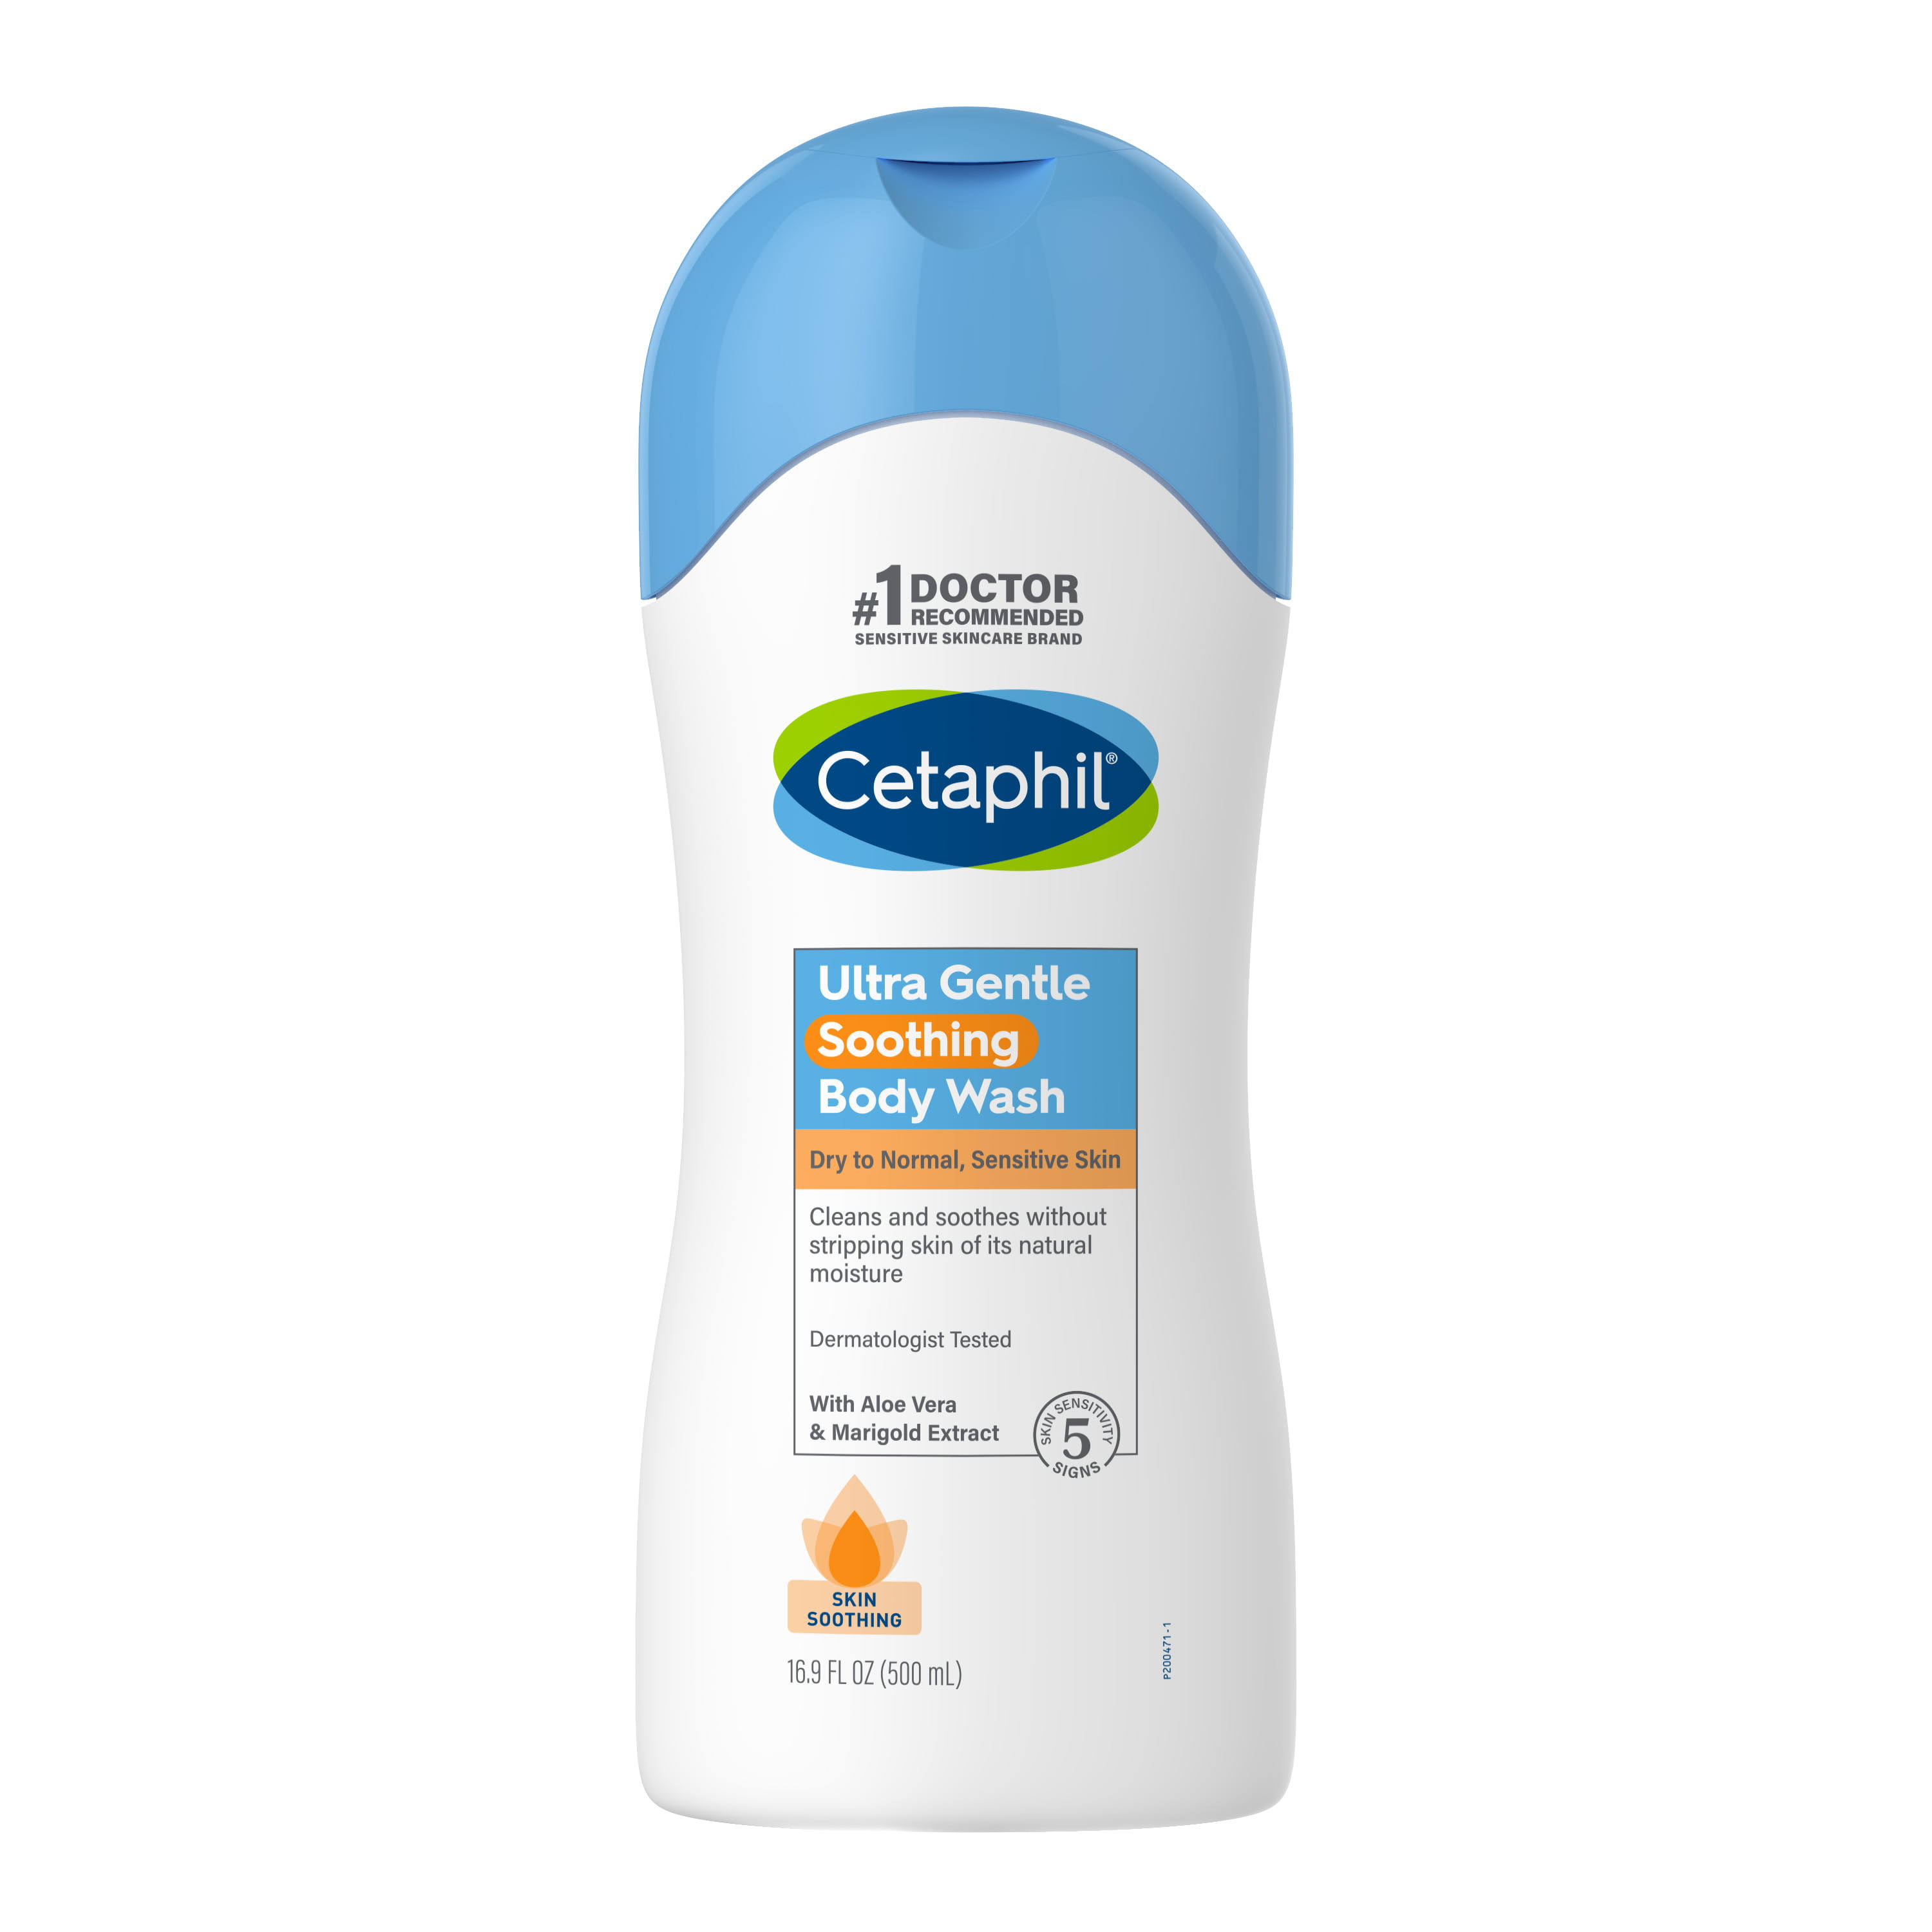 Cetaphil Ultra Gentle Soothing Body Wash 16.9 fl oz (500 ml)